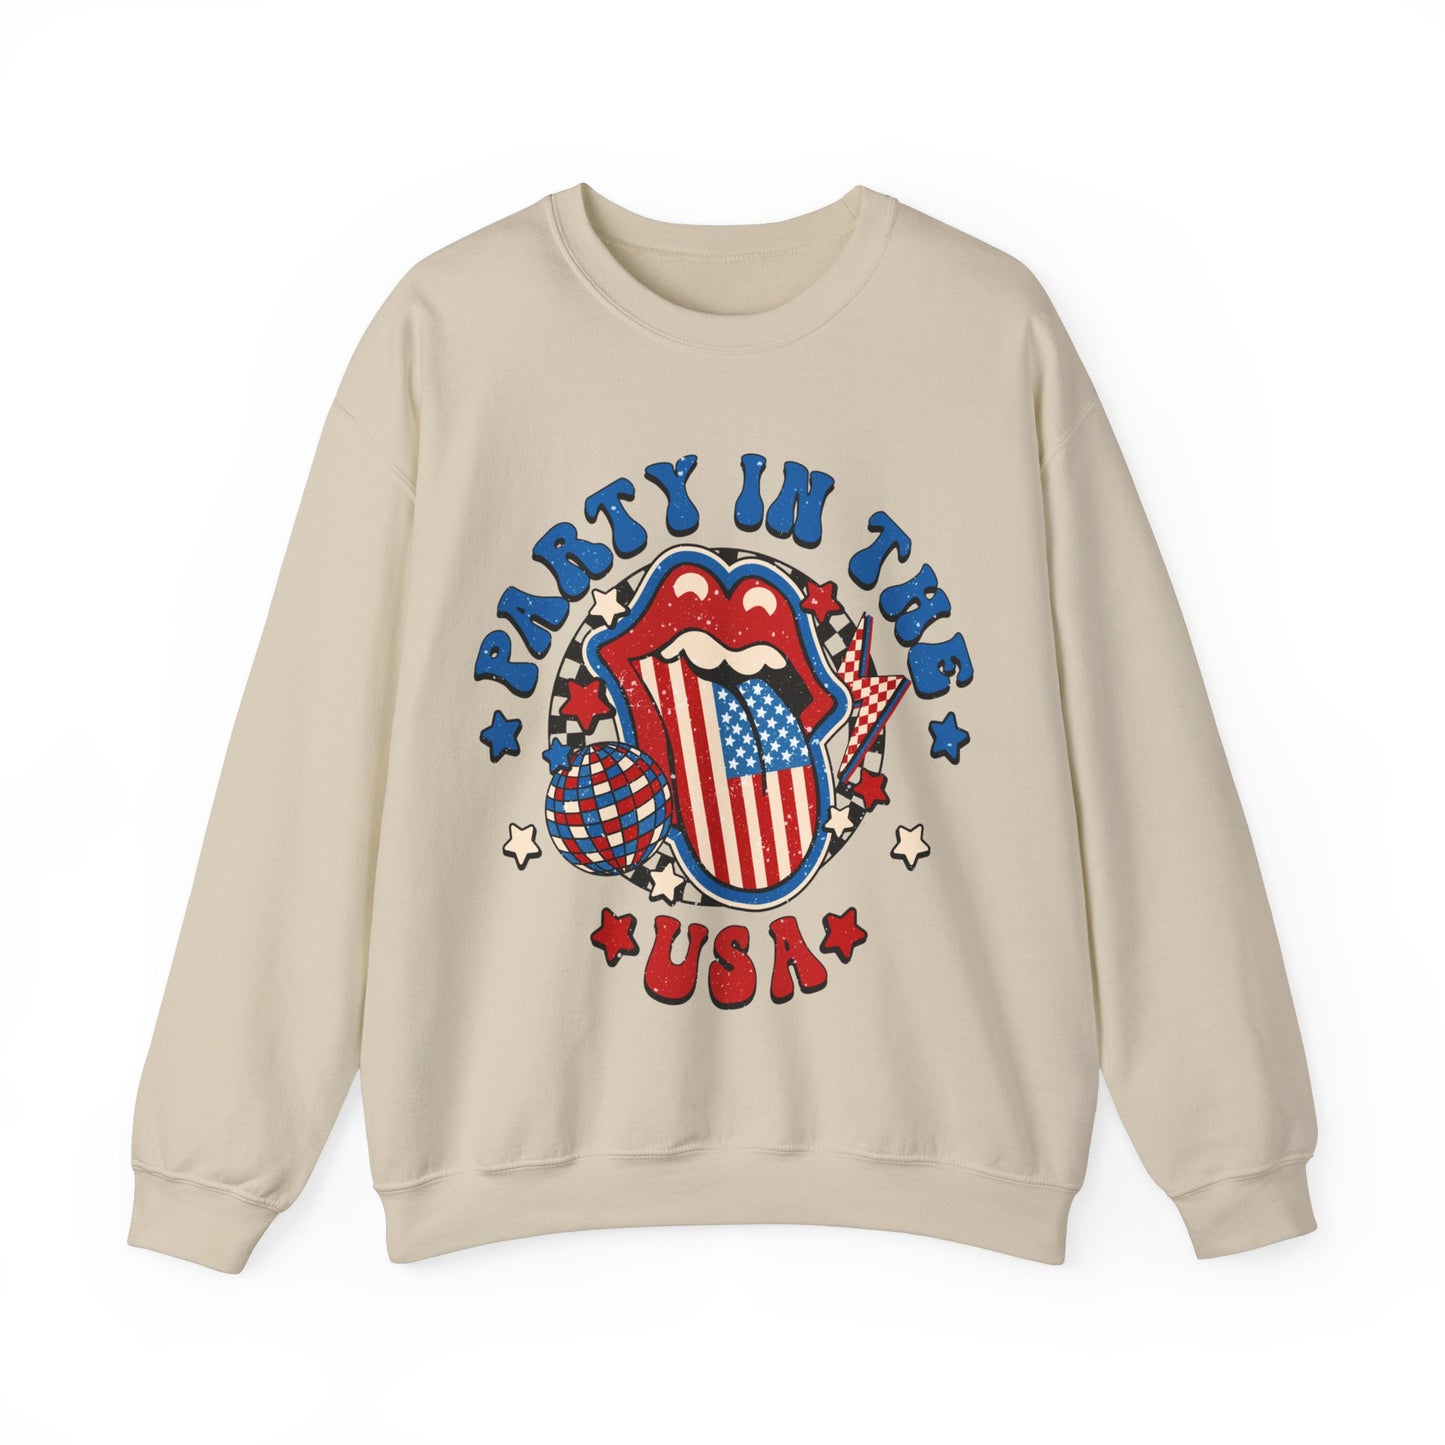 Party in the USA - Crewneck Sweatshirt